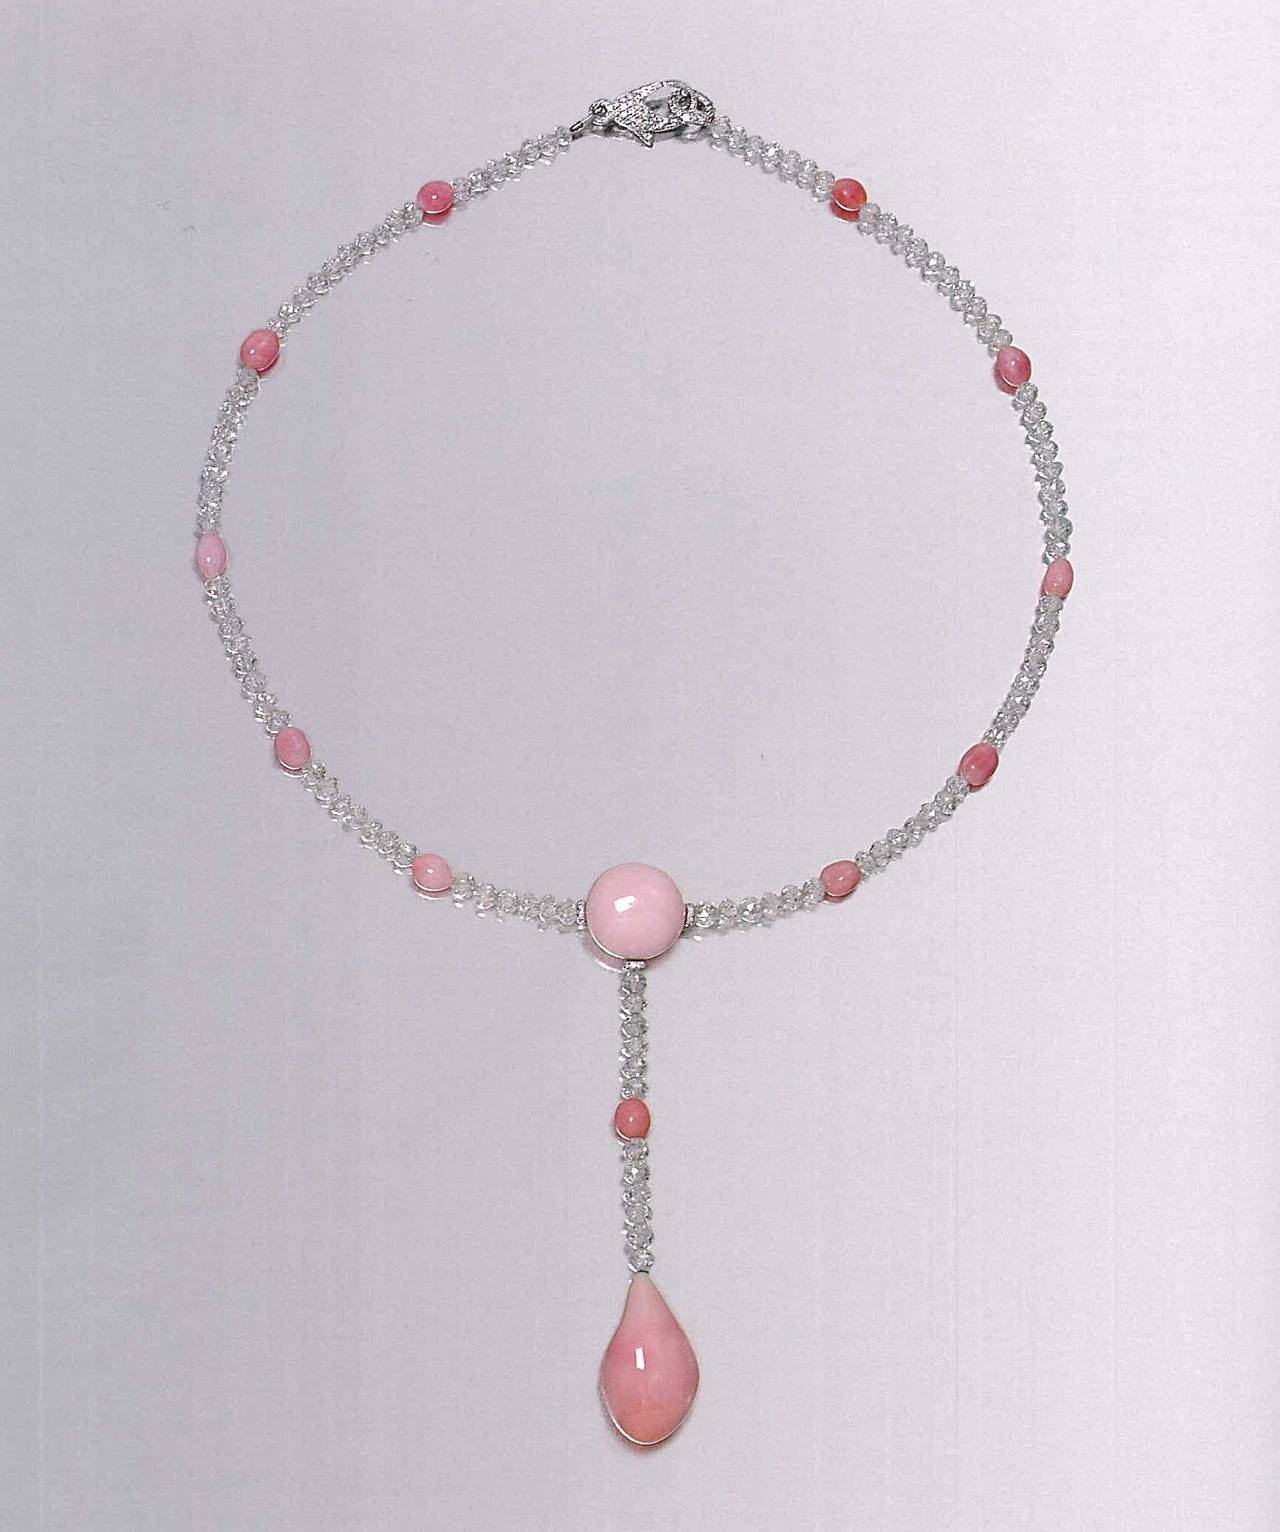 Book of The Pink Pearl, LA PERLE ROSE 'Tresor natural des Caraibes' 1